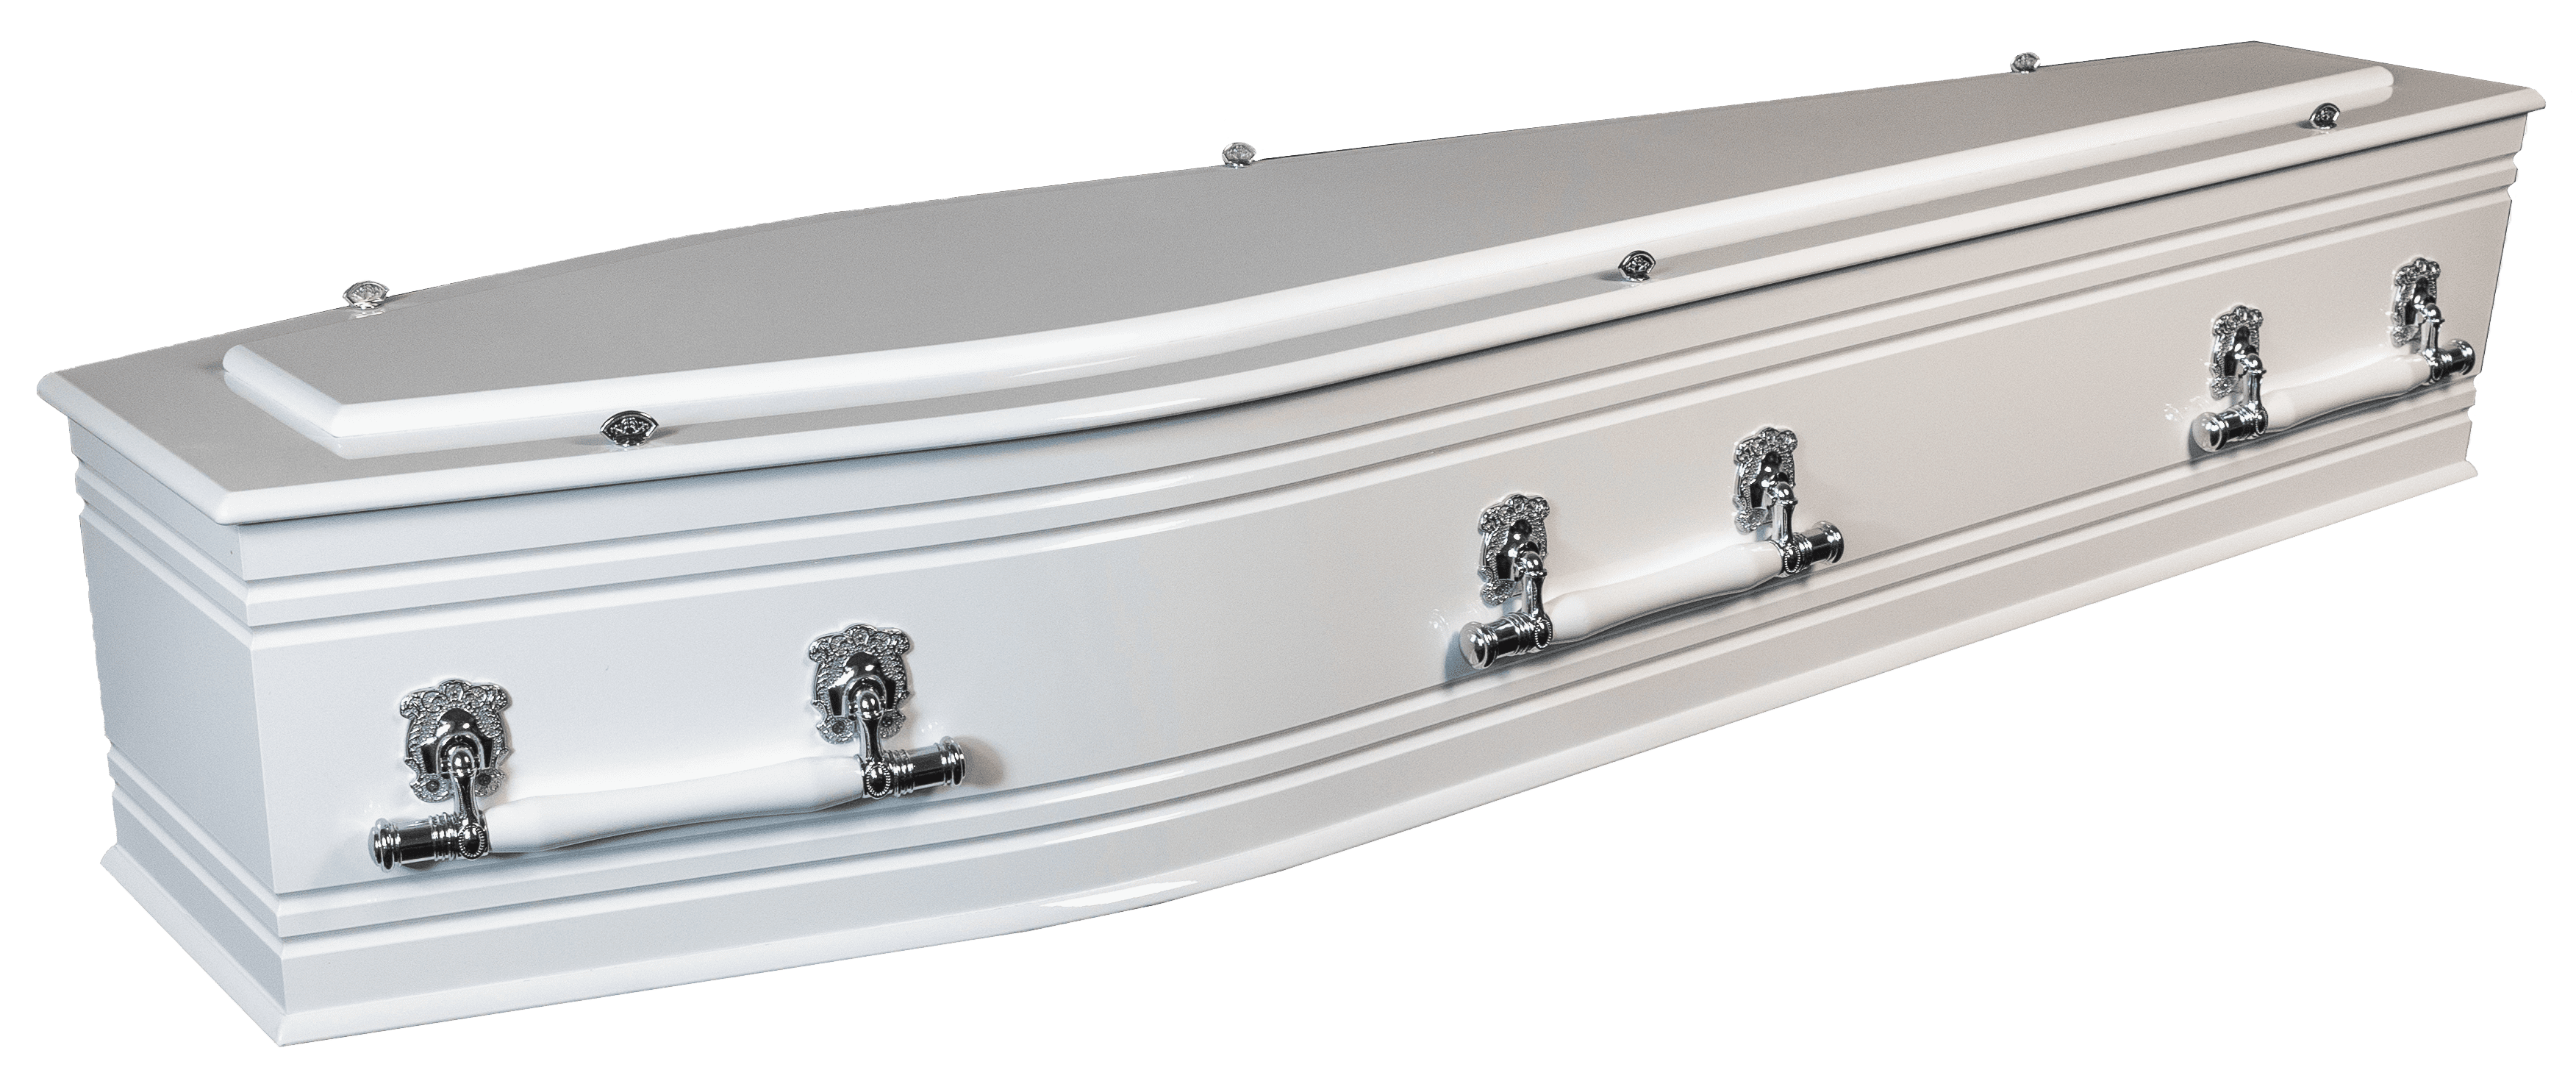 white gloss finish vacy coffin